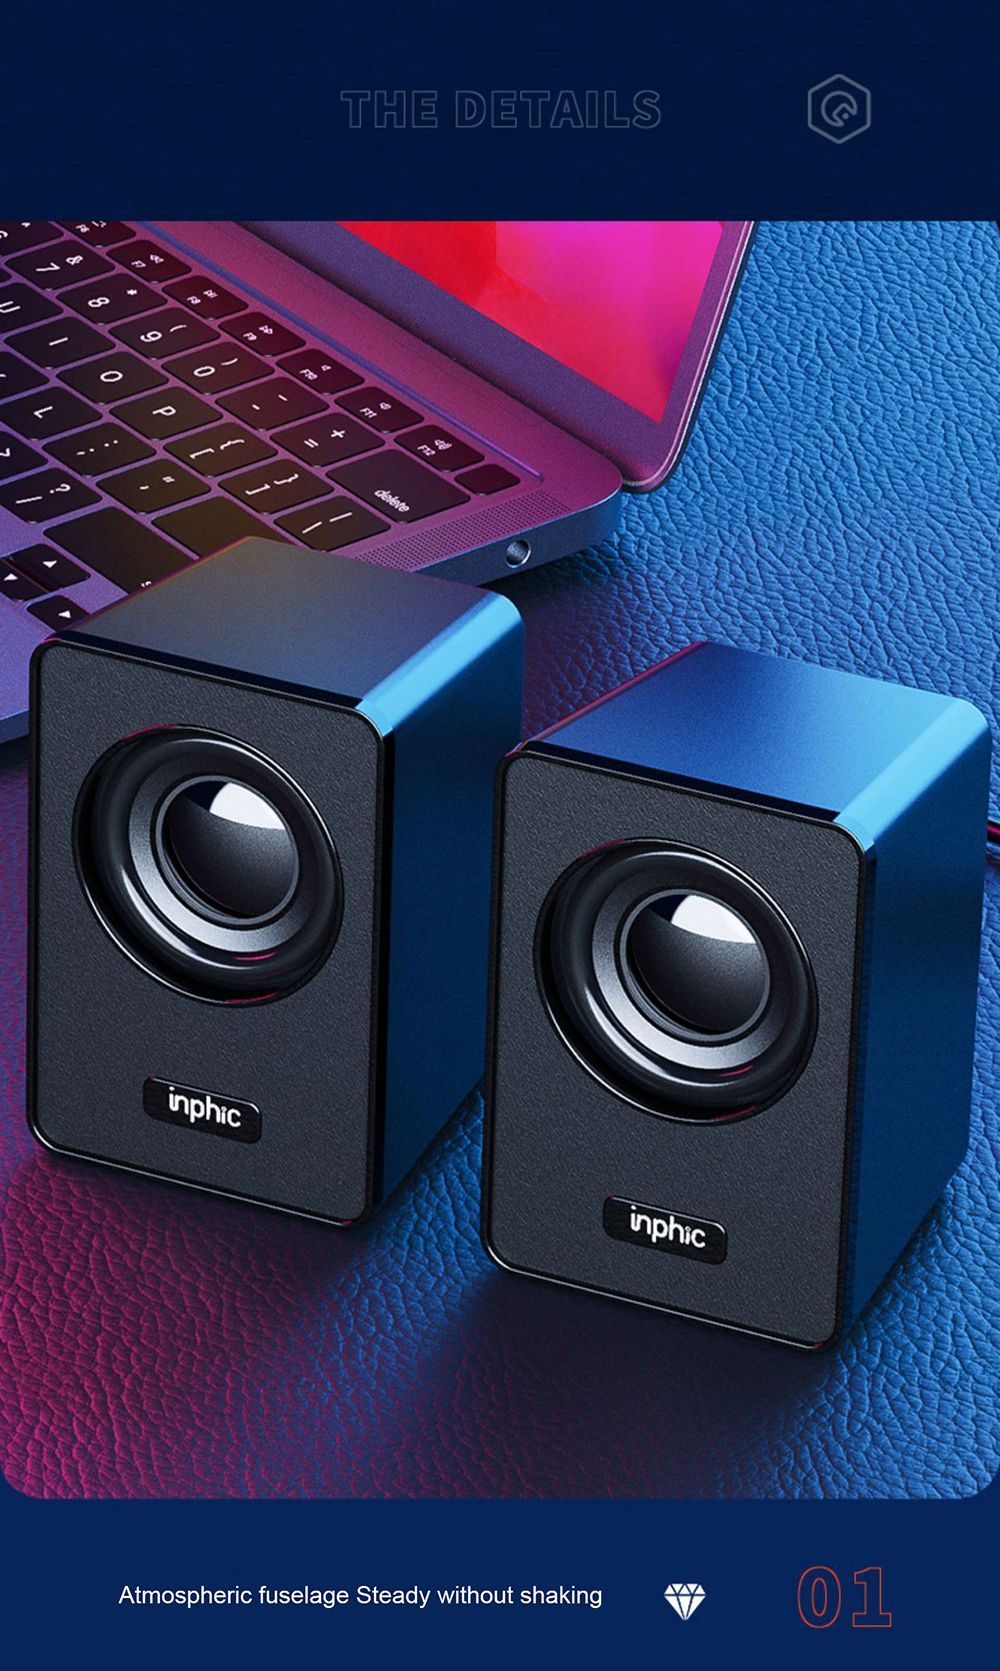 Inphic-US2-Computer-Desktop-Speaker-20-Channel-Speaker-System-4D-Surround-Sound-HIFI-Noise-Reduction-1765948